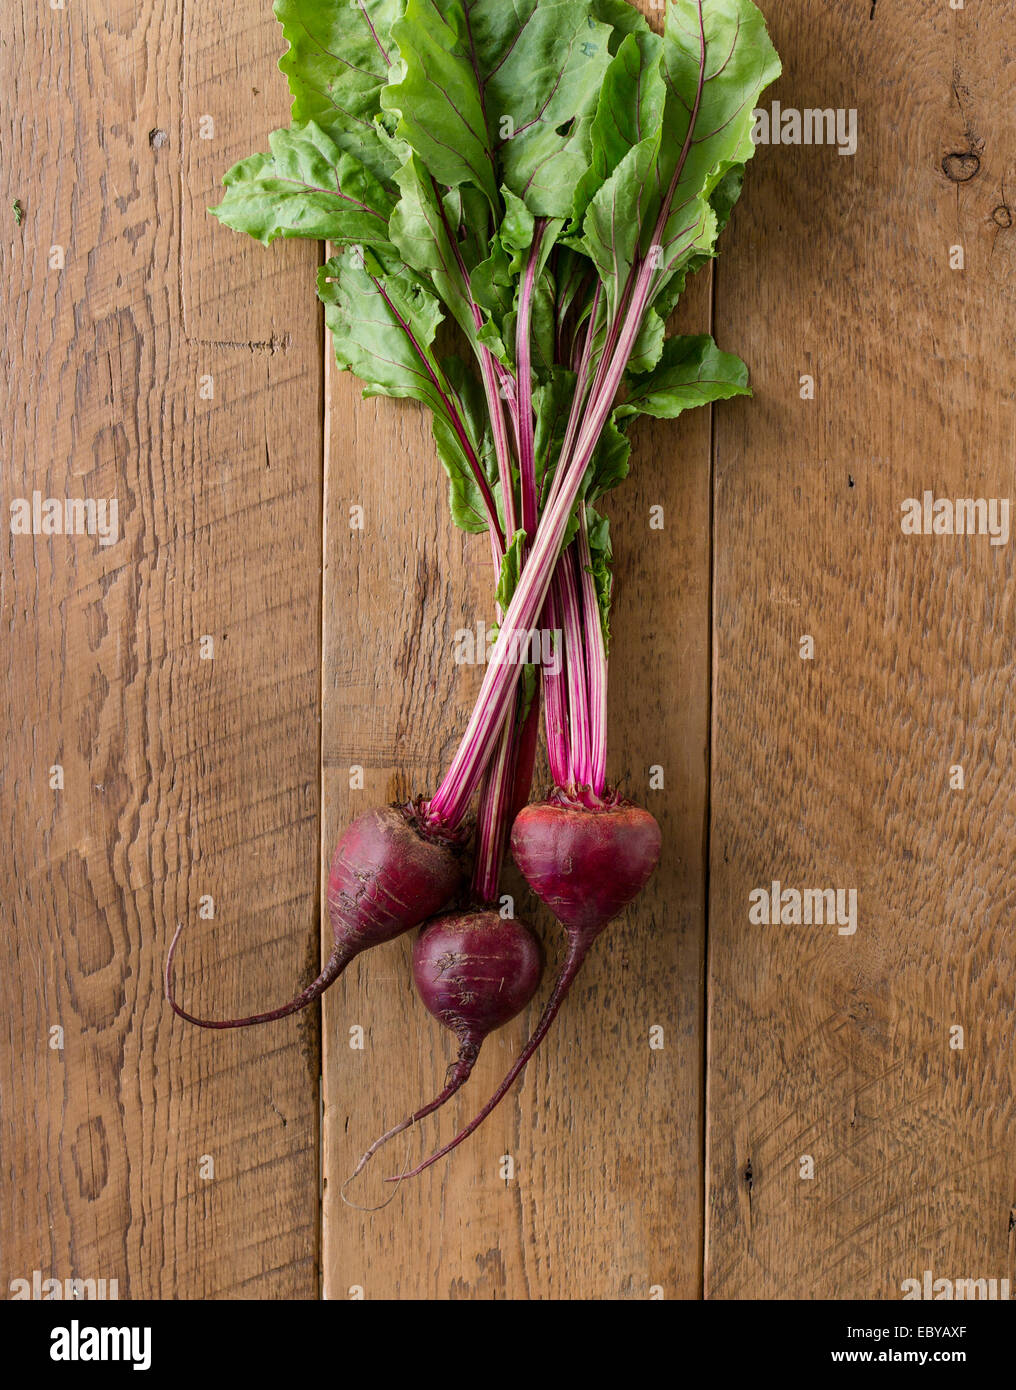 fresh organic produce Stock Photo